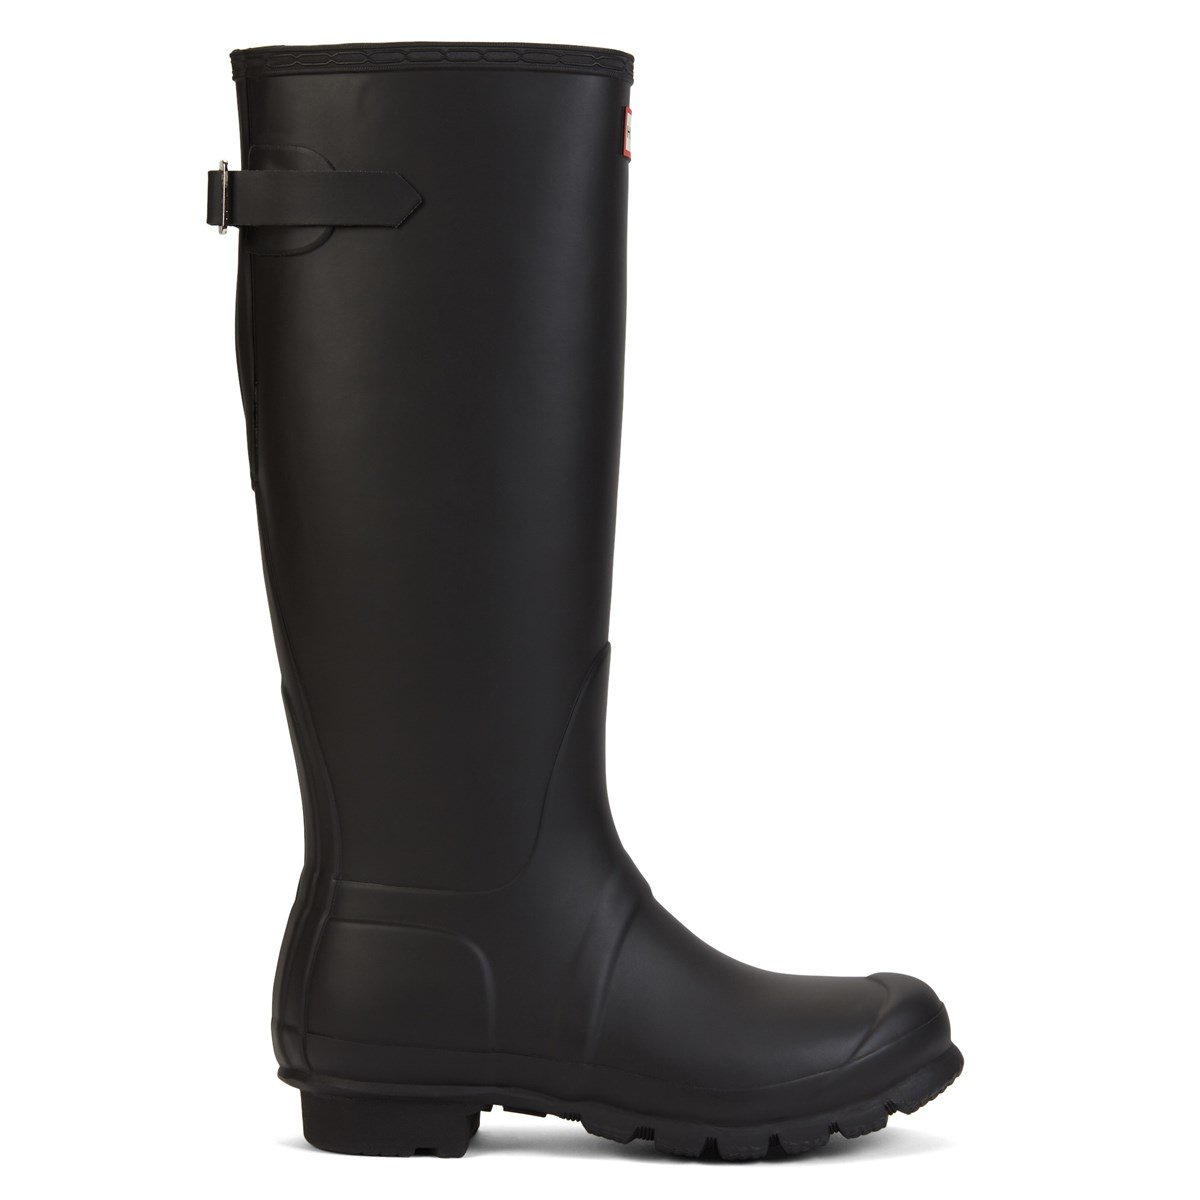 Women's Original Tall Adjustable Rain Boots in Black